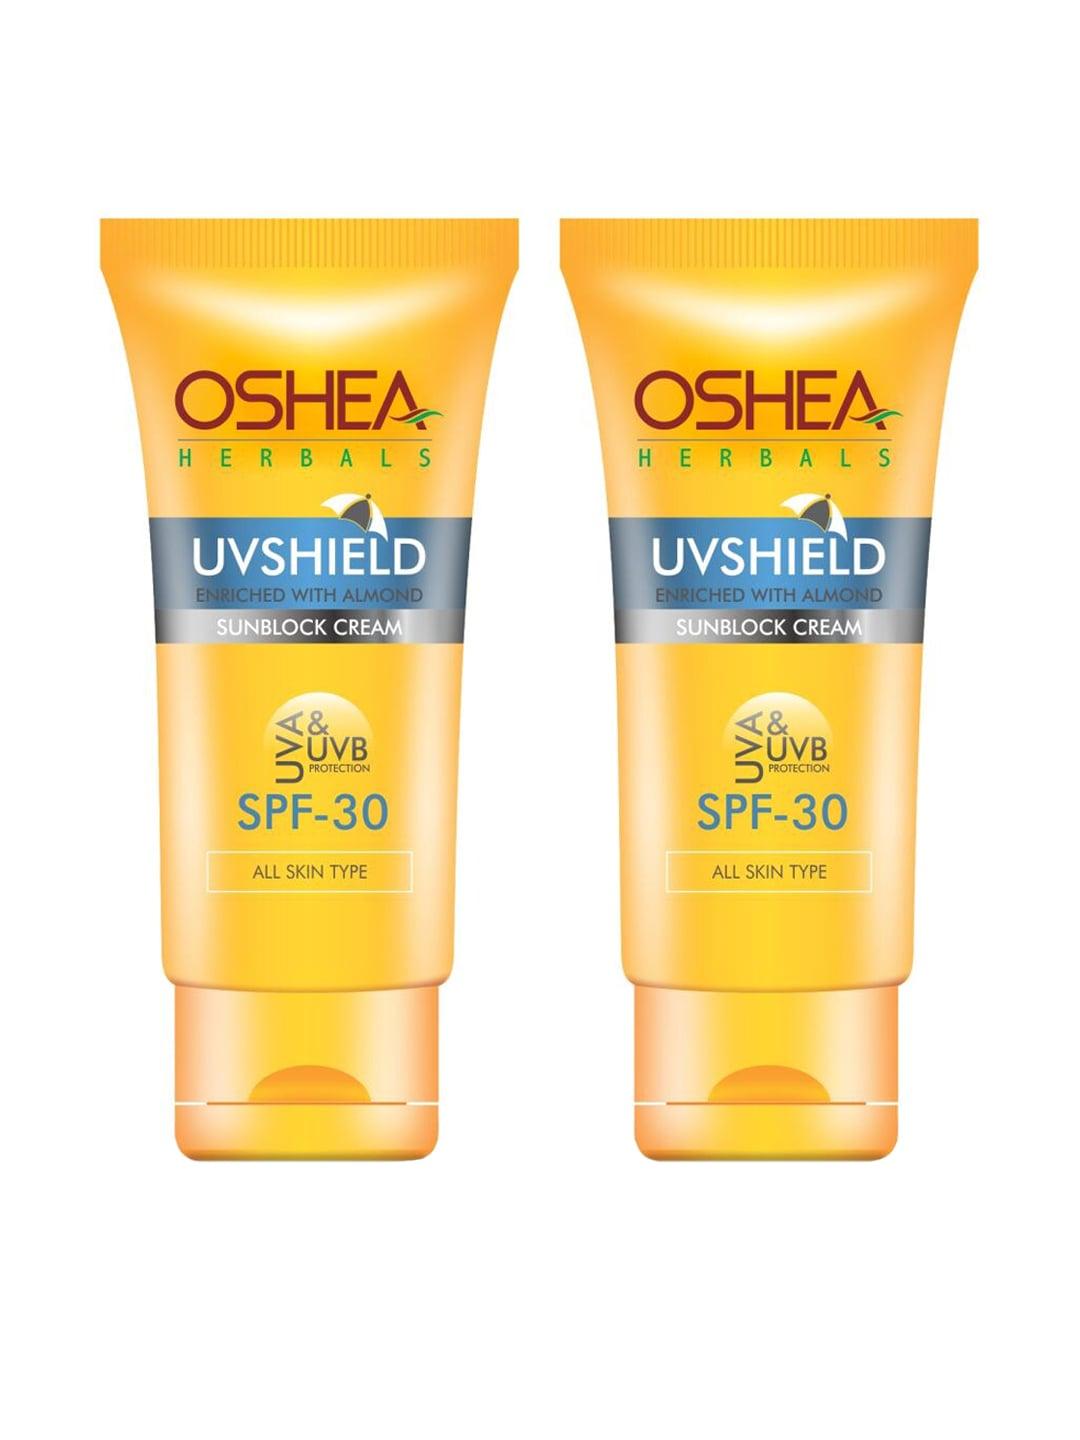 oshea herbals set of 2 uv shield spf 30 sun block cream with glycerine 60 g each